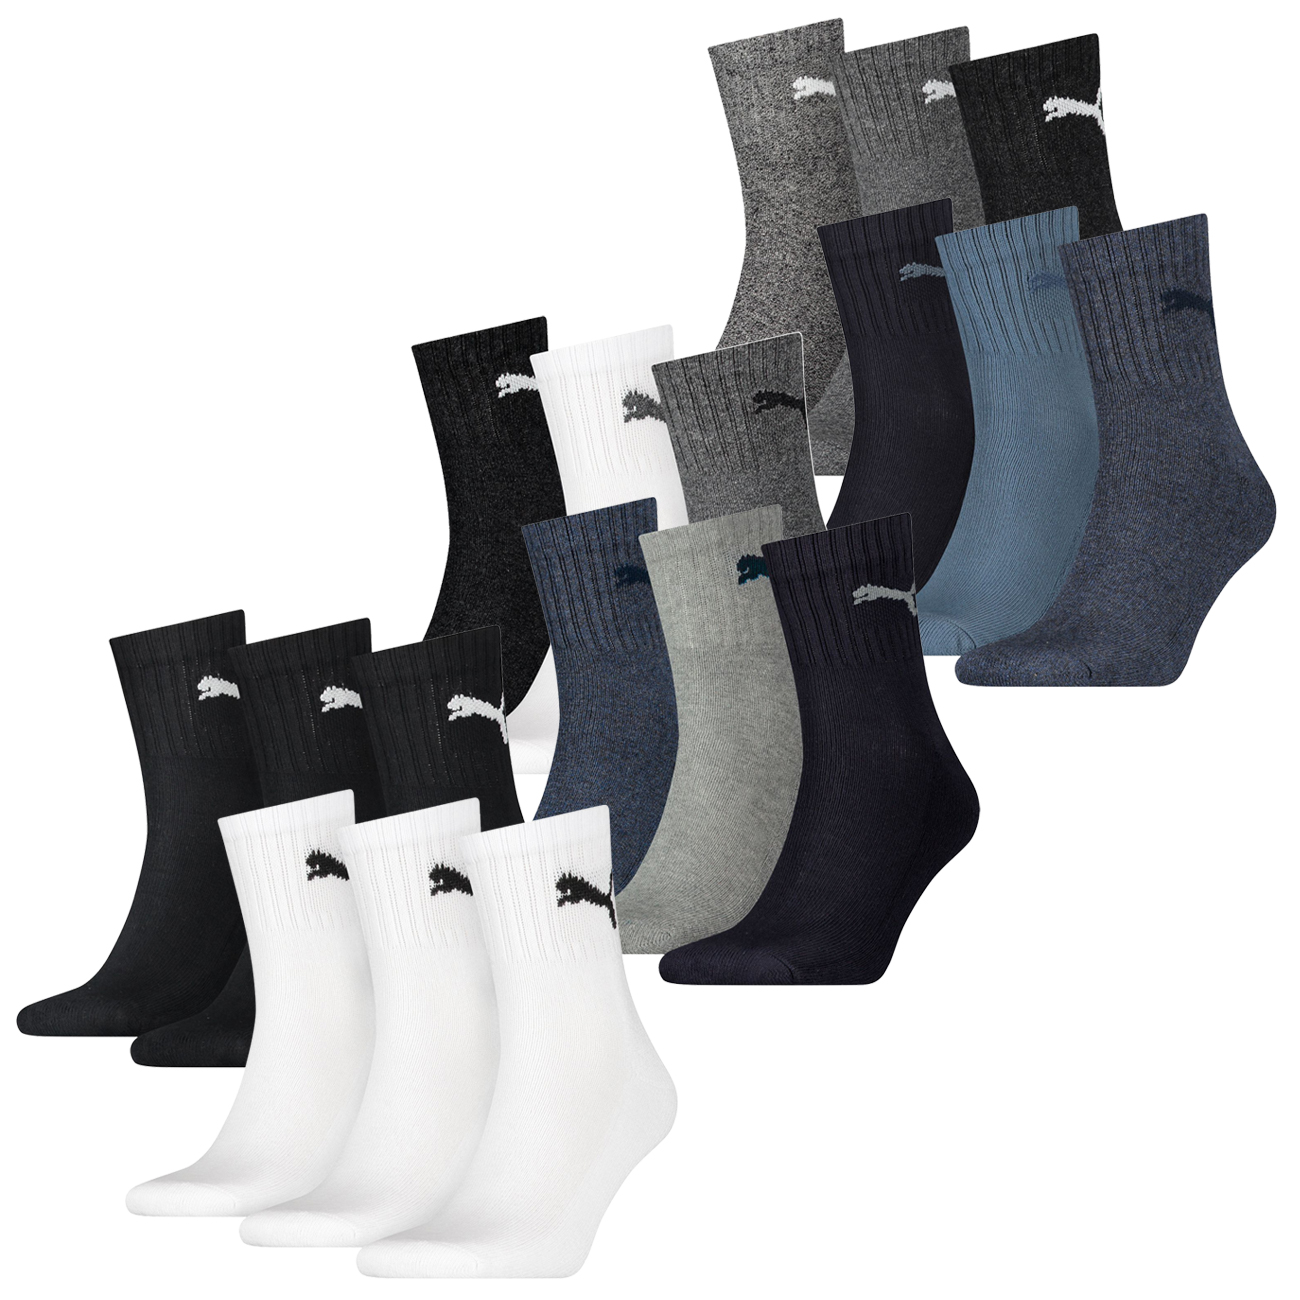 Puma Herren Damen Unisex Sport Socken Baumwolle SHORT CREW - 6er 9er 12er  Multipack günstig kaufen